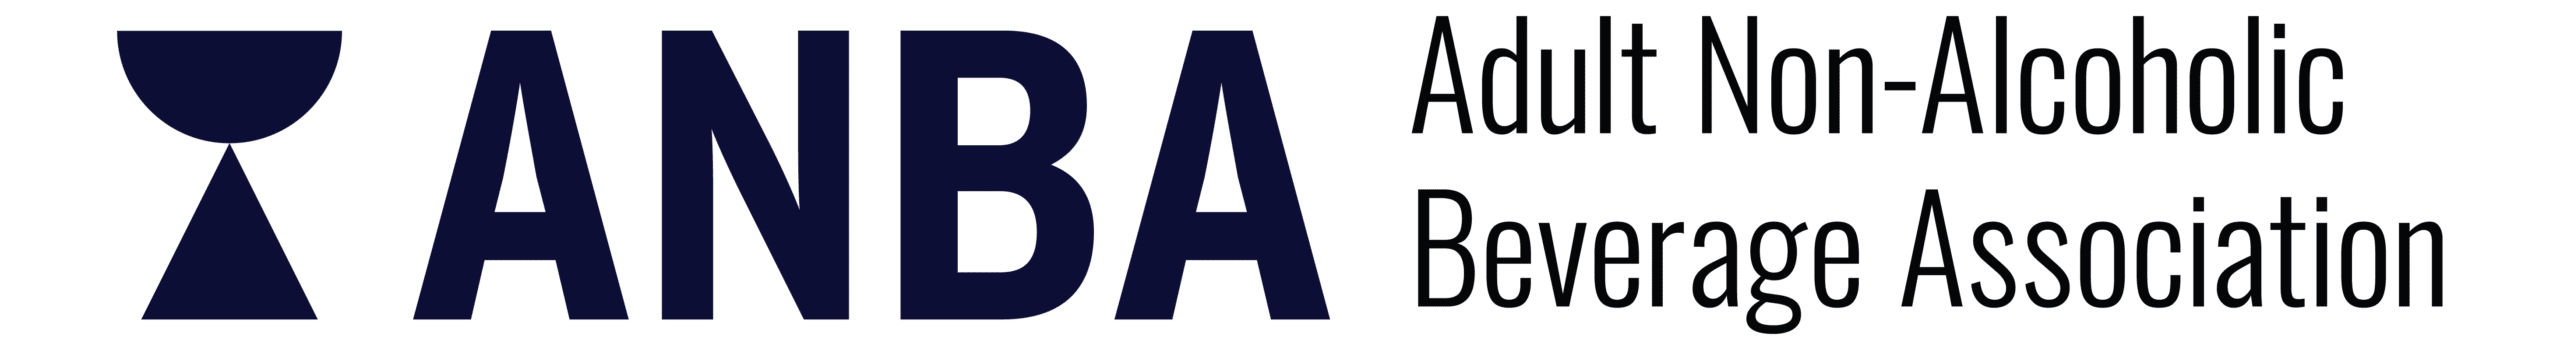 Adult Non-Alcoholic Beverage Association (ANBA)